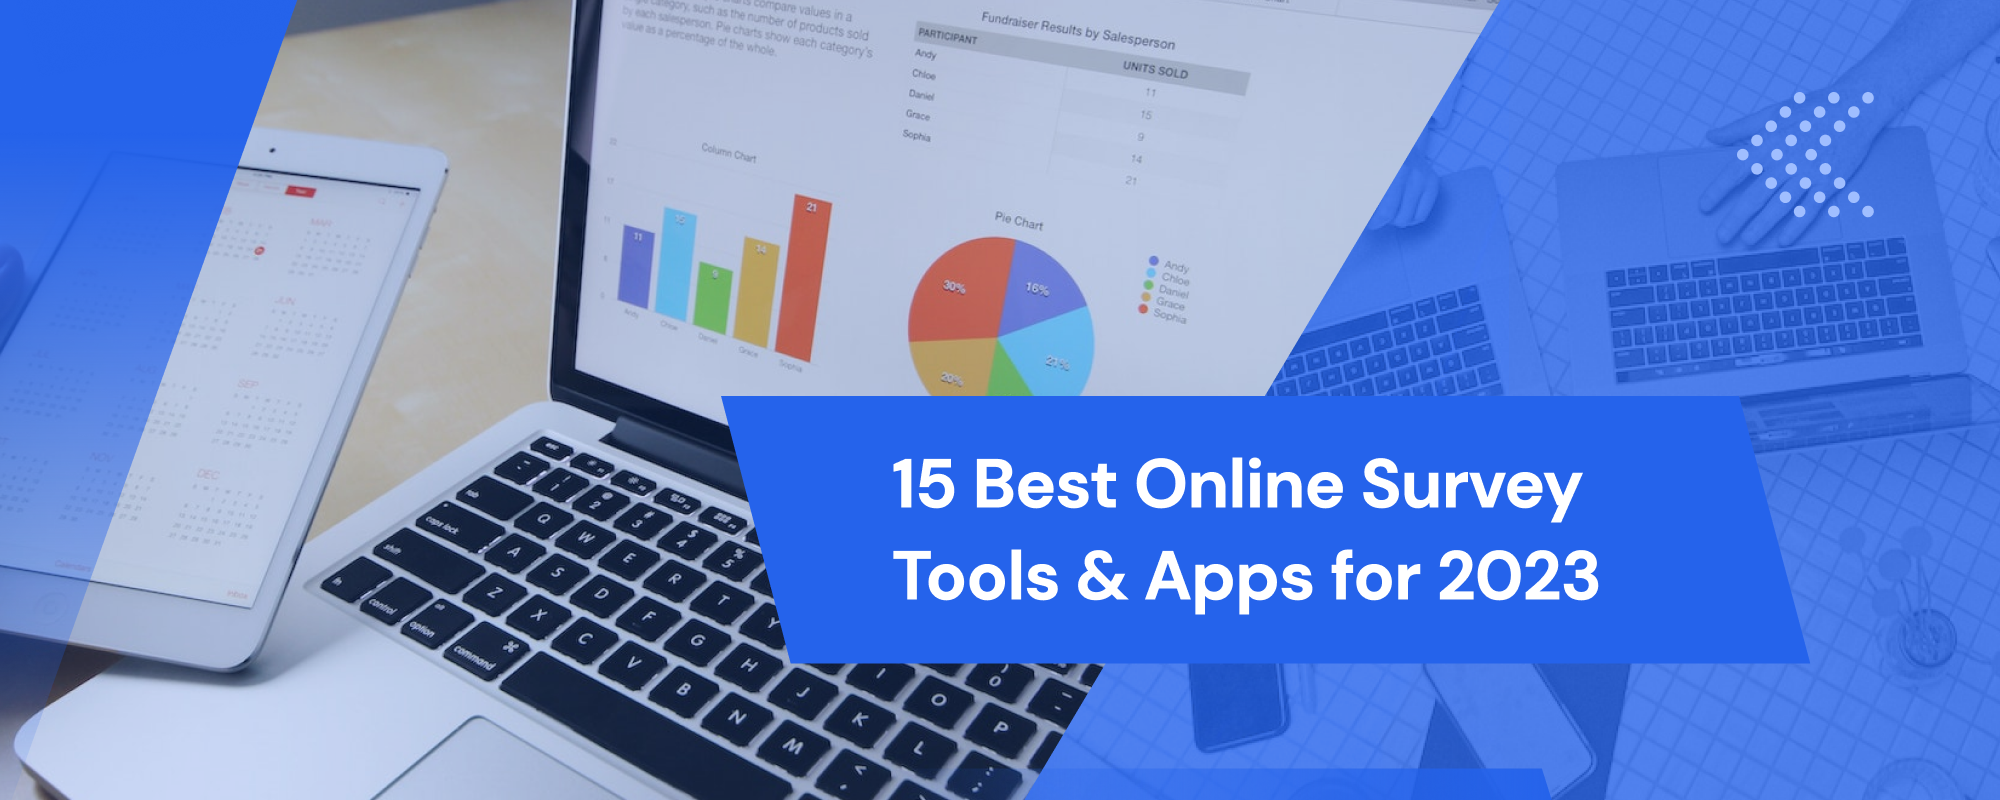 15 Best Online Survey Tools & Apps for 2023